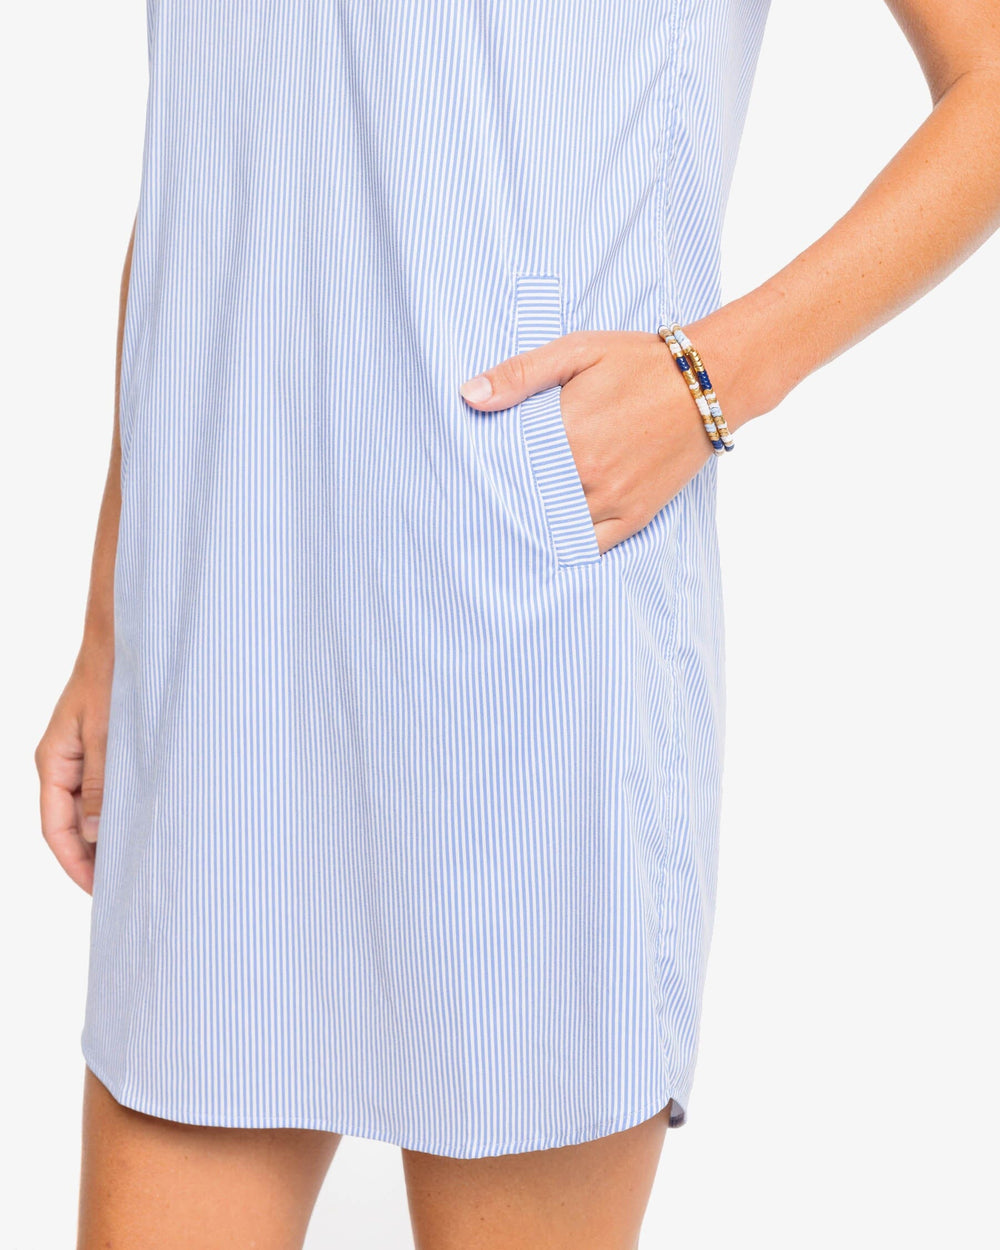 Kamryn brrr°® Intercoastal Stripe Dress